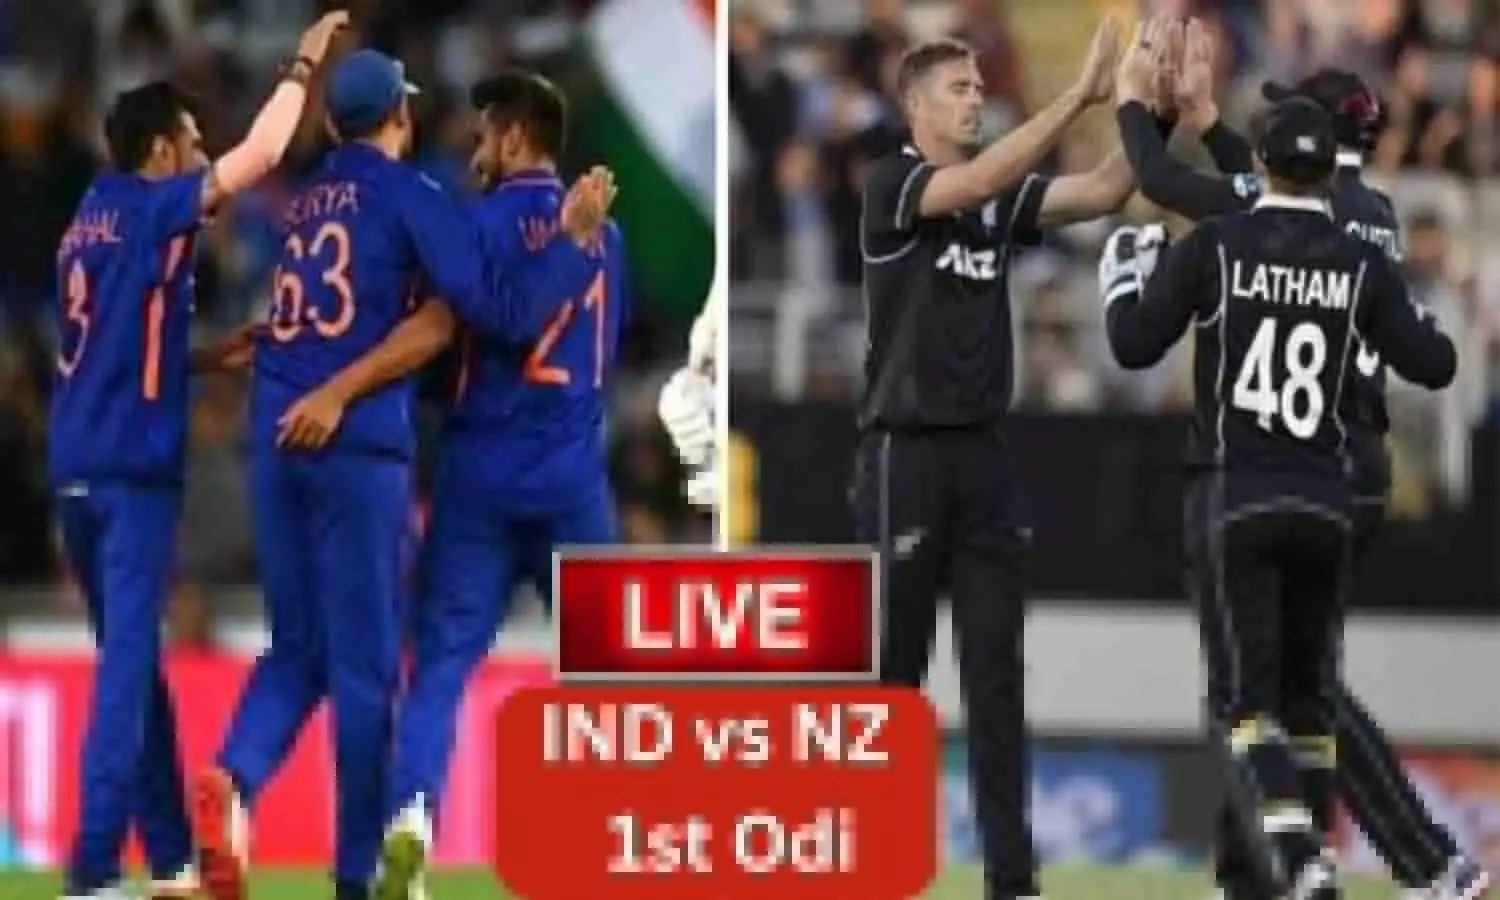 IND vs NZ 1st ODI Live Score